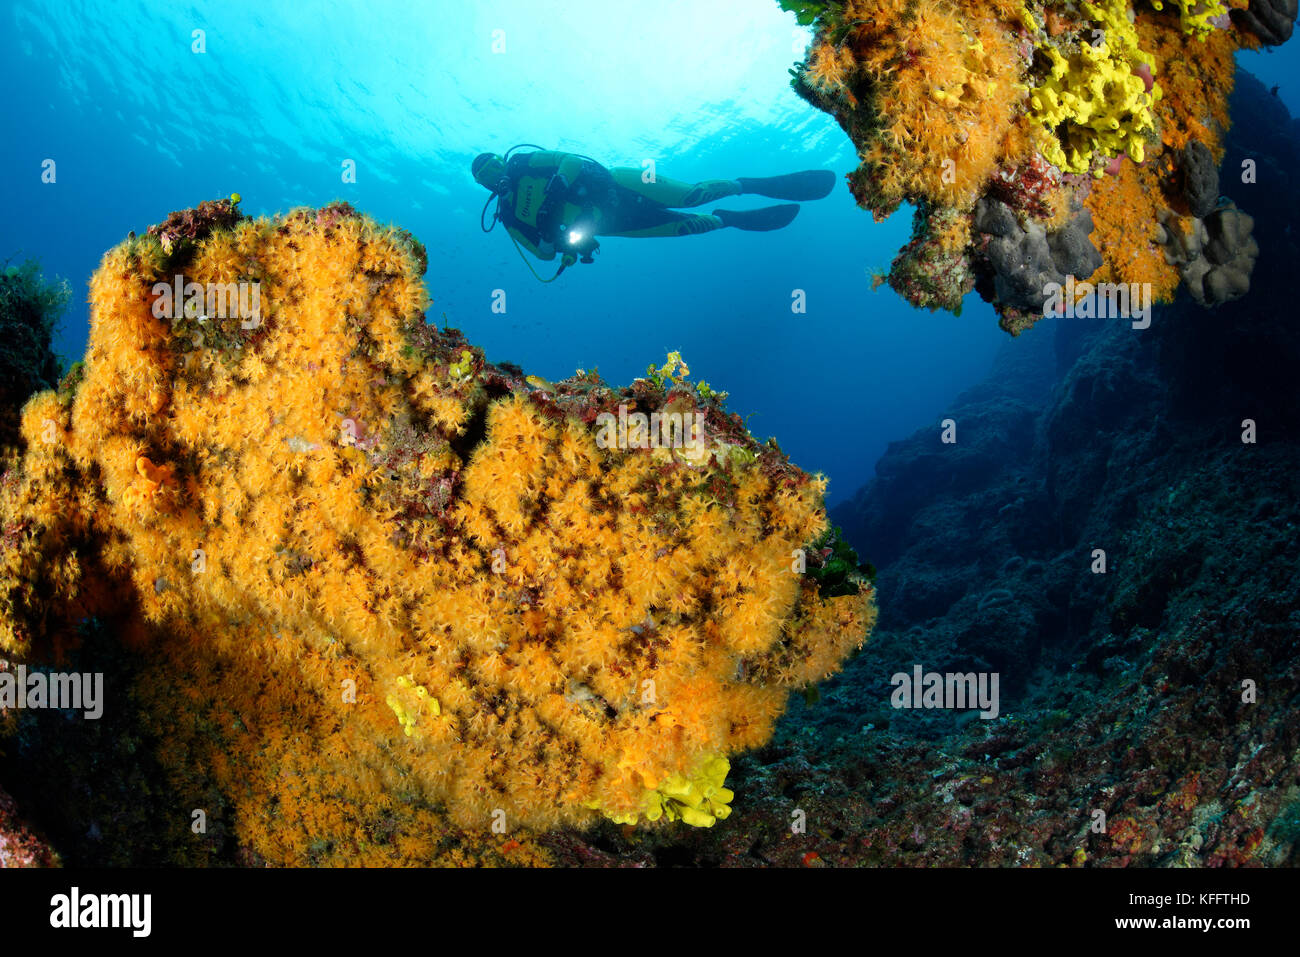 Yellow Encrusting Anemone, Parazoanthus axinellae, Coralreef and scuba diver, Adriatic Sea, Mediterranean Sea, Selce, Kvaner Gulf, Croatia Stock Photo